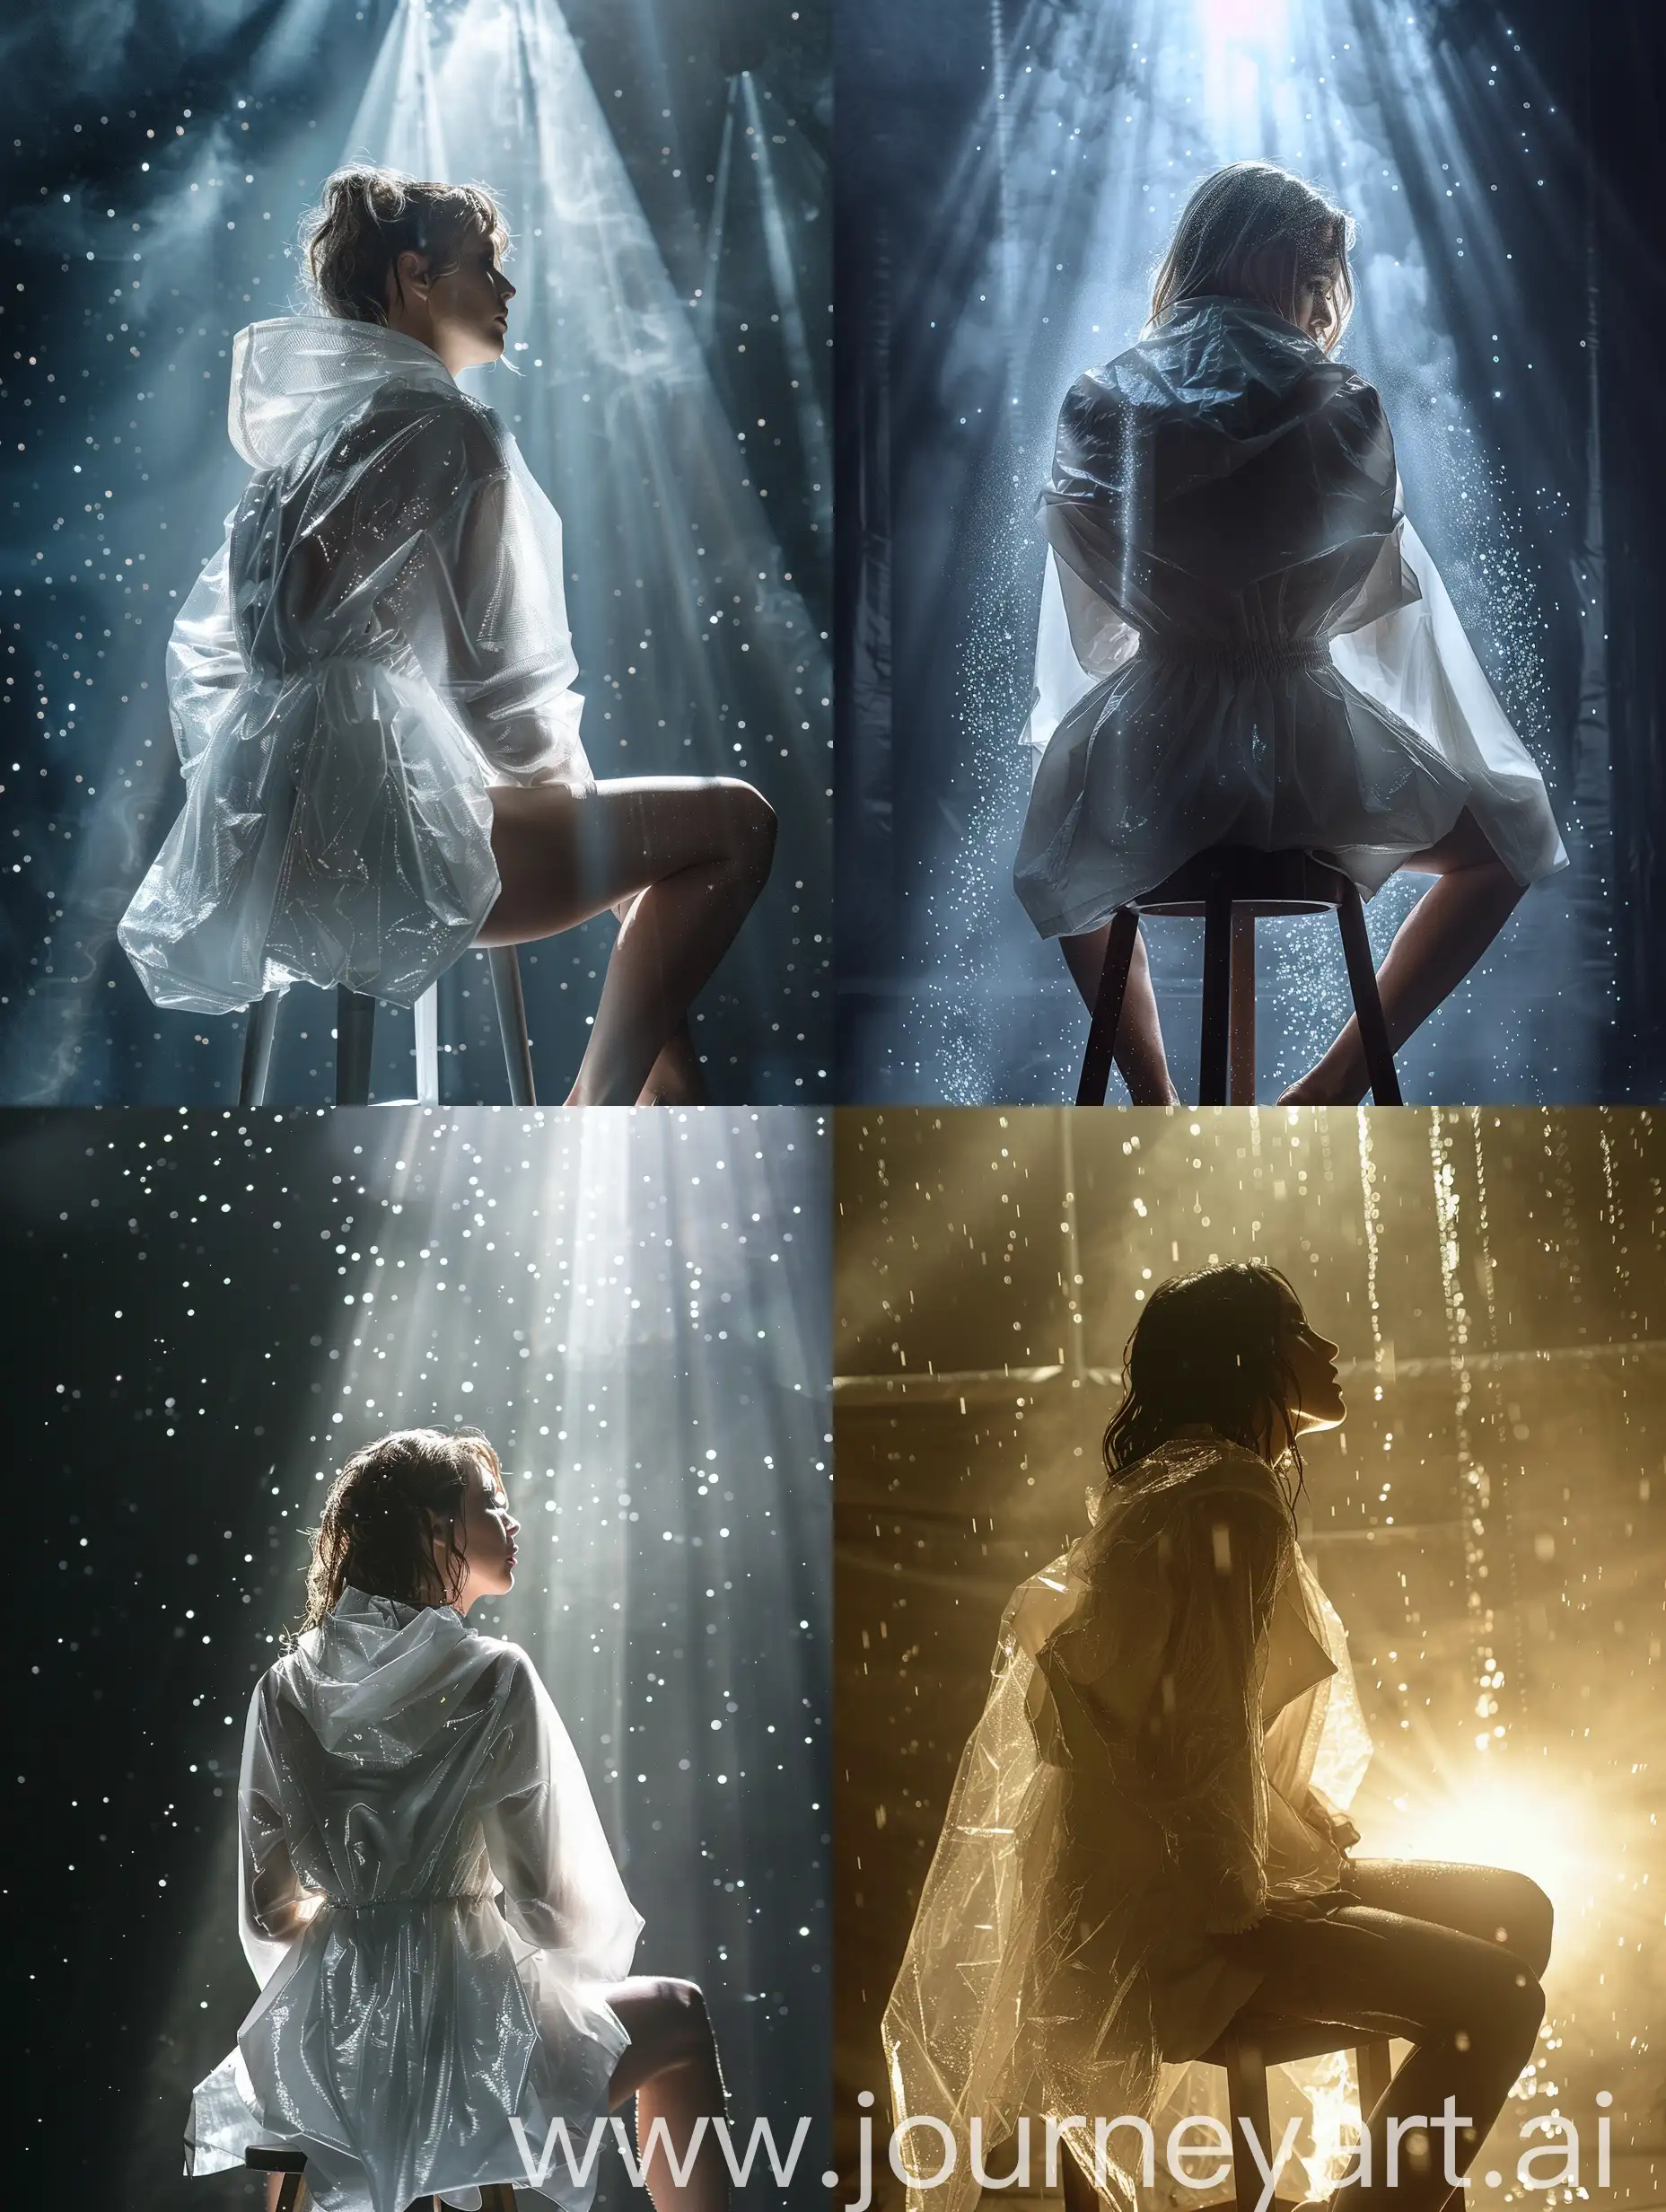 Elegant-Woman-in-White-Dress-Sitting-on-Stool-in-Dramatic-Lighting